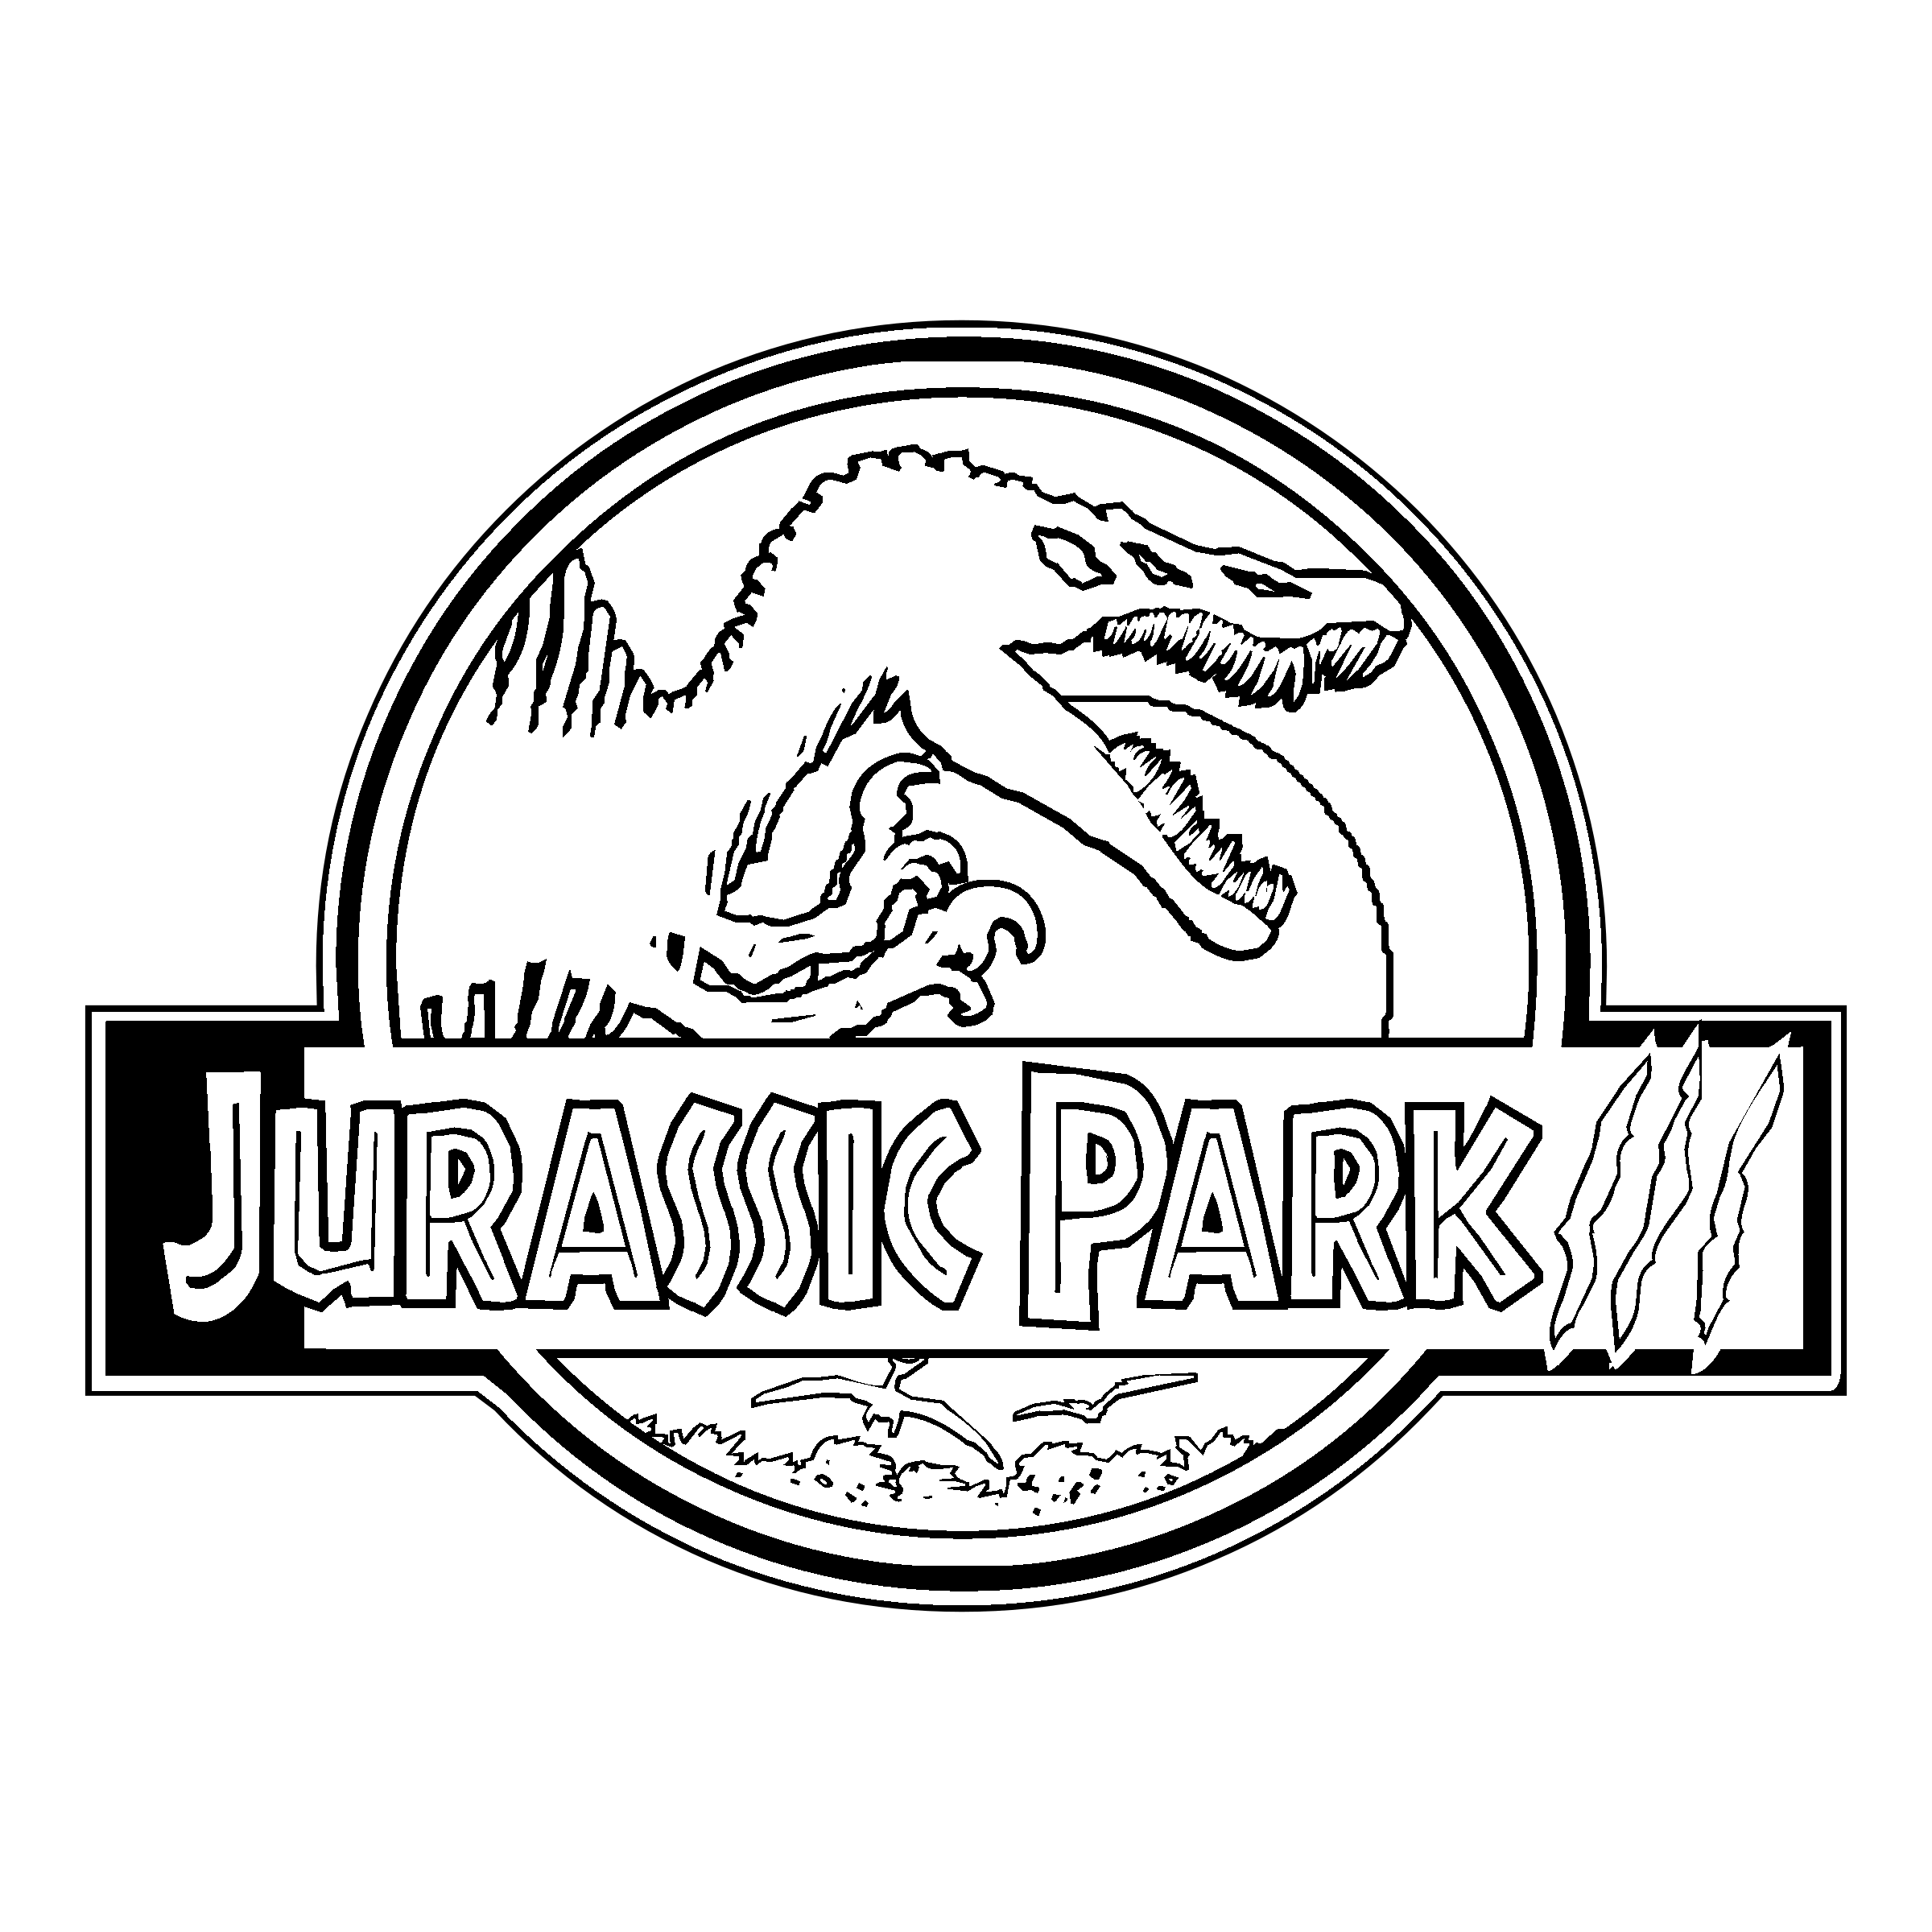 Jurassic Park Black and White Logo - Jurassic Park III Logo PNG Transparent & SVG Vector